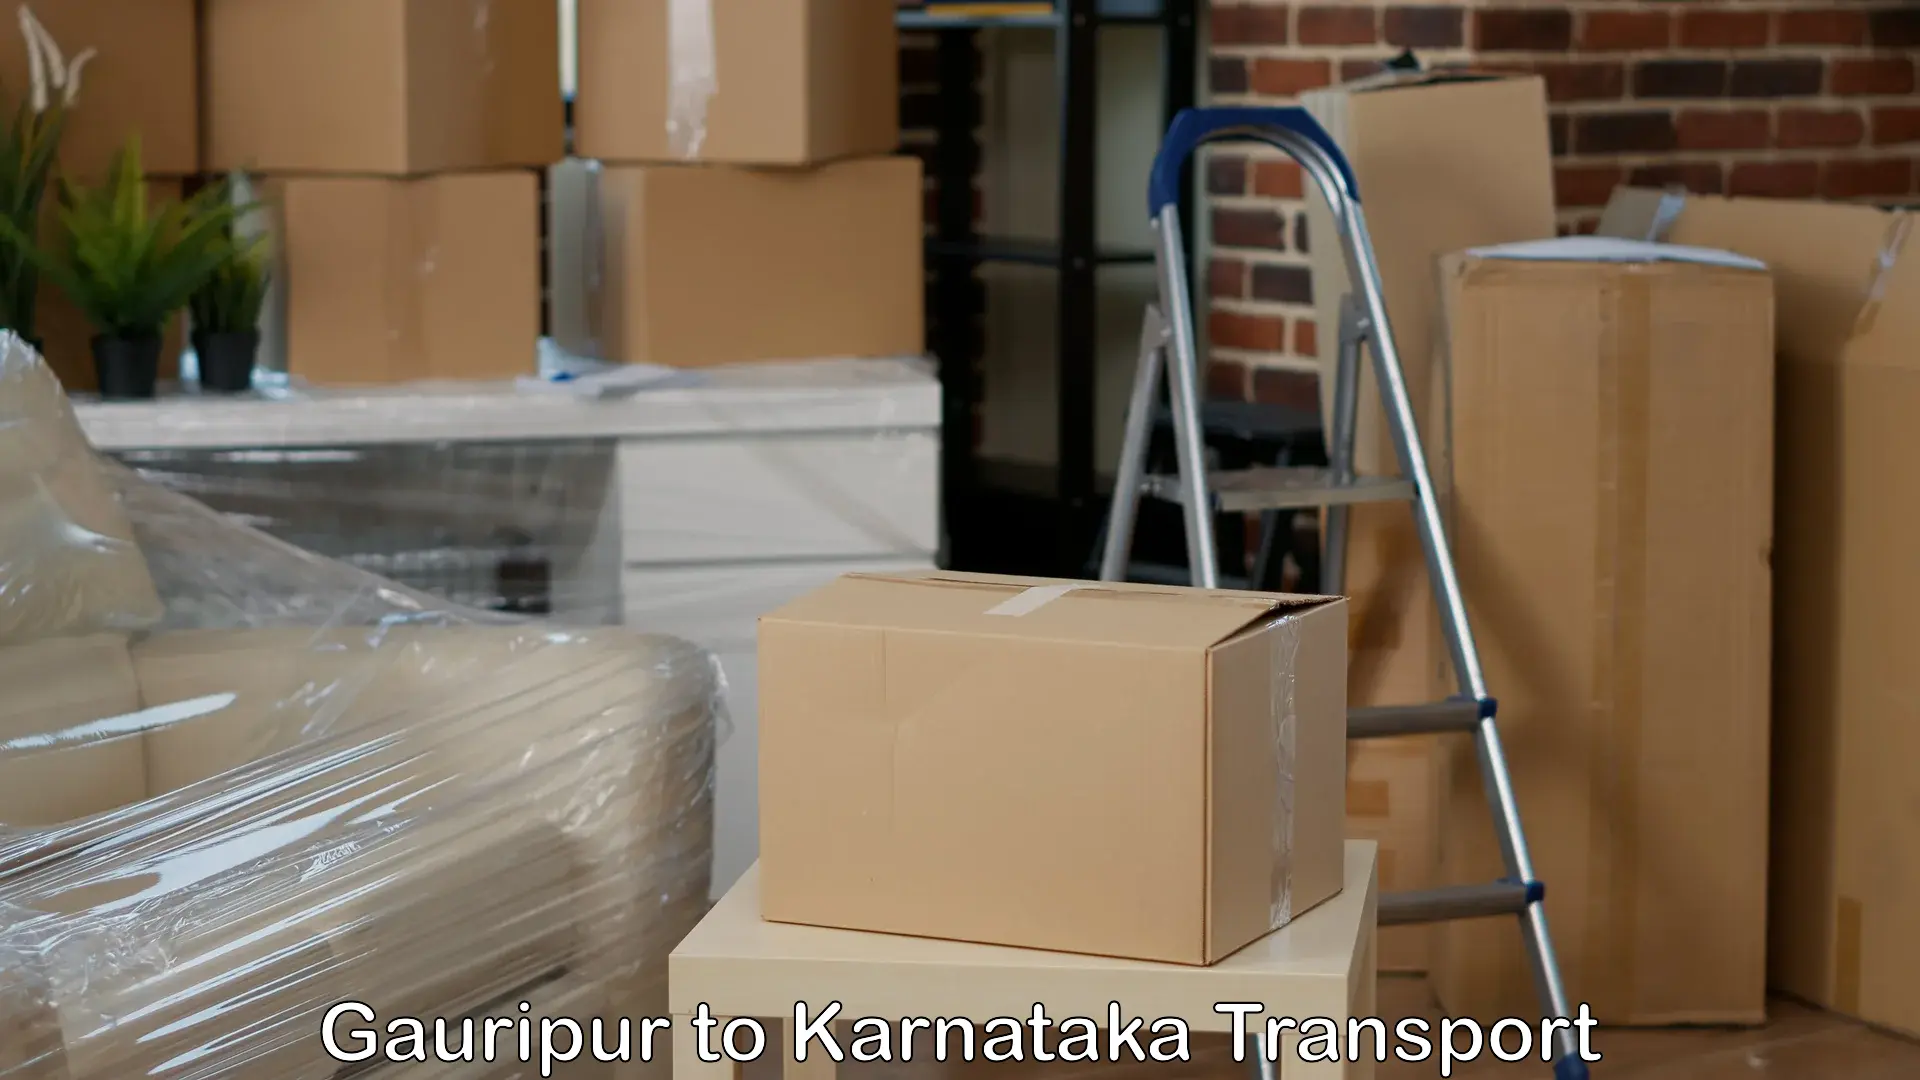 Shipping partner Gauripur to Maddur